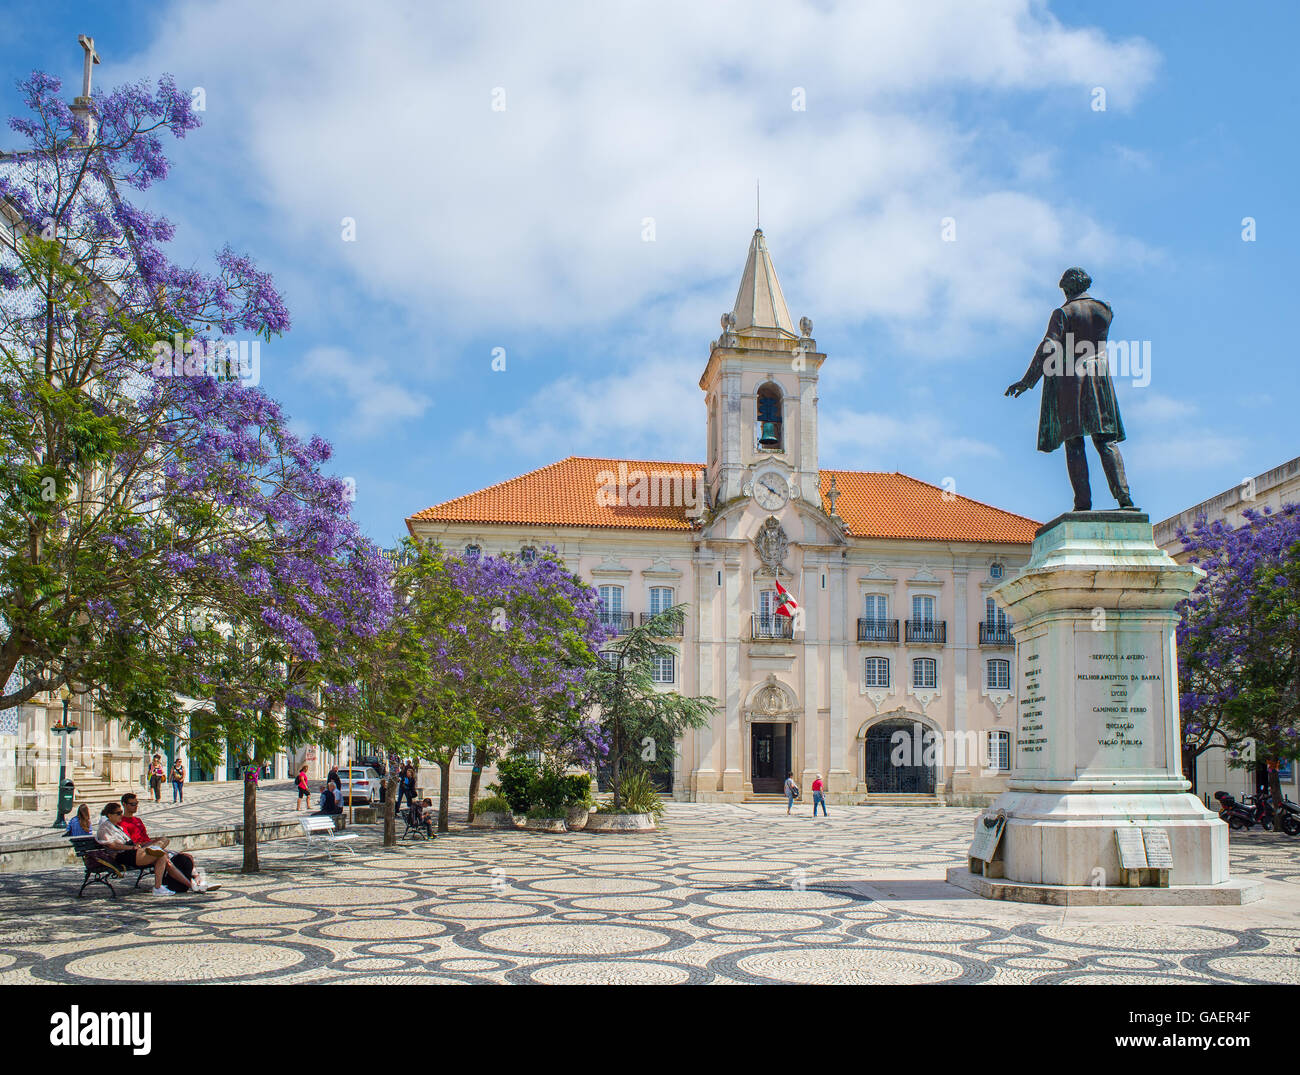 Camara Municipal de Aveiro (Common Hall)  and  Jose Estevao Magalhaes statue in Praca da Republica of Aveiro, Portugal. Stock Photo